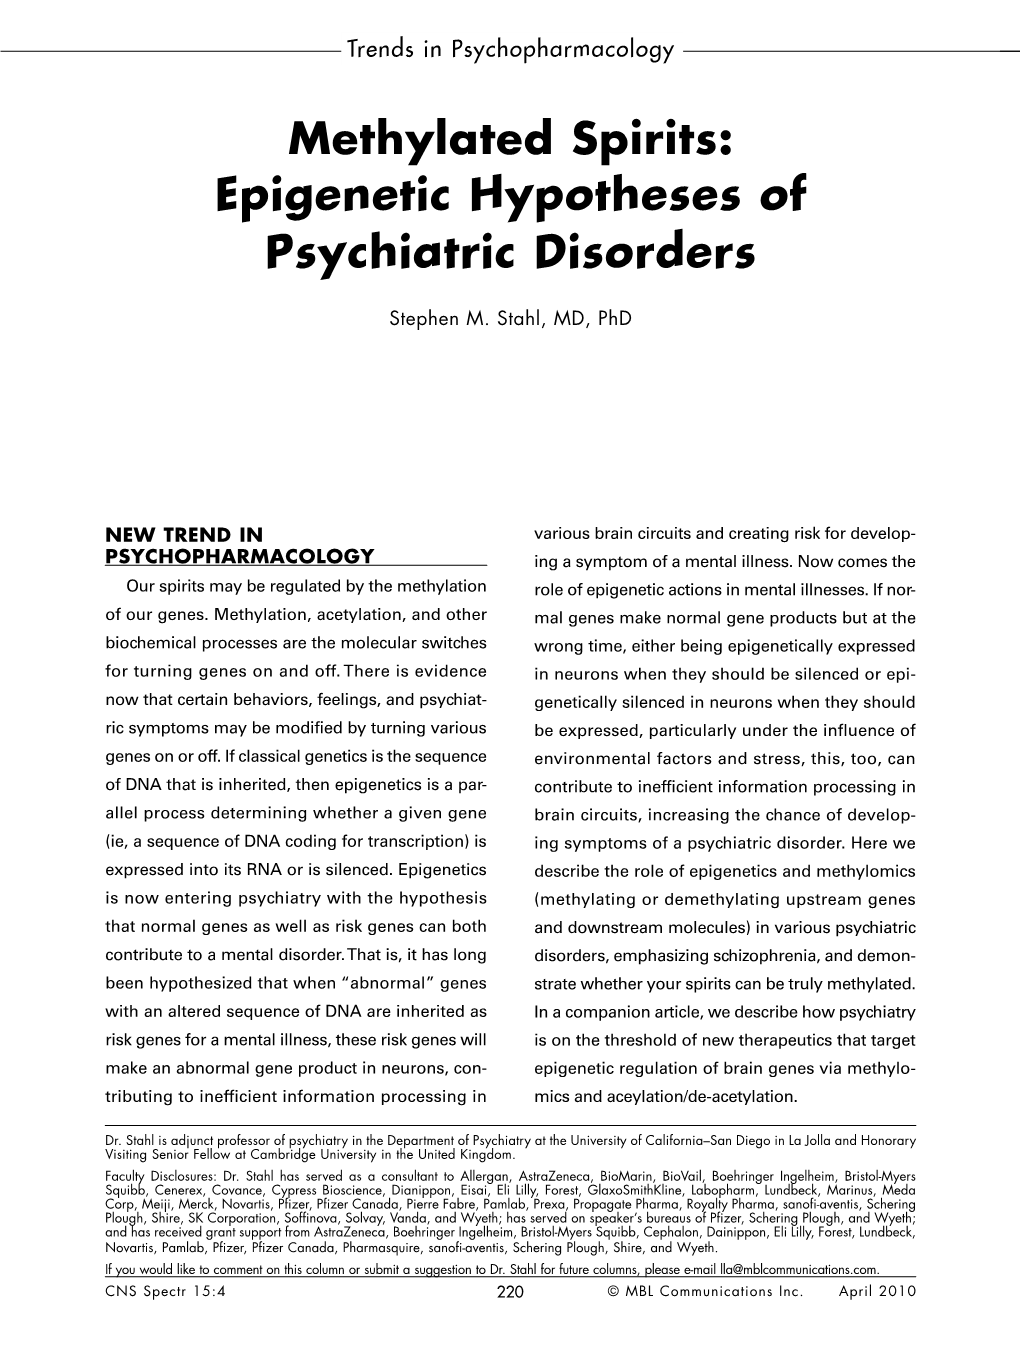 Methylated Spirits: Epigenetic Hypotheses of Psychiatric Disorders